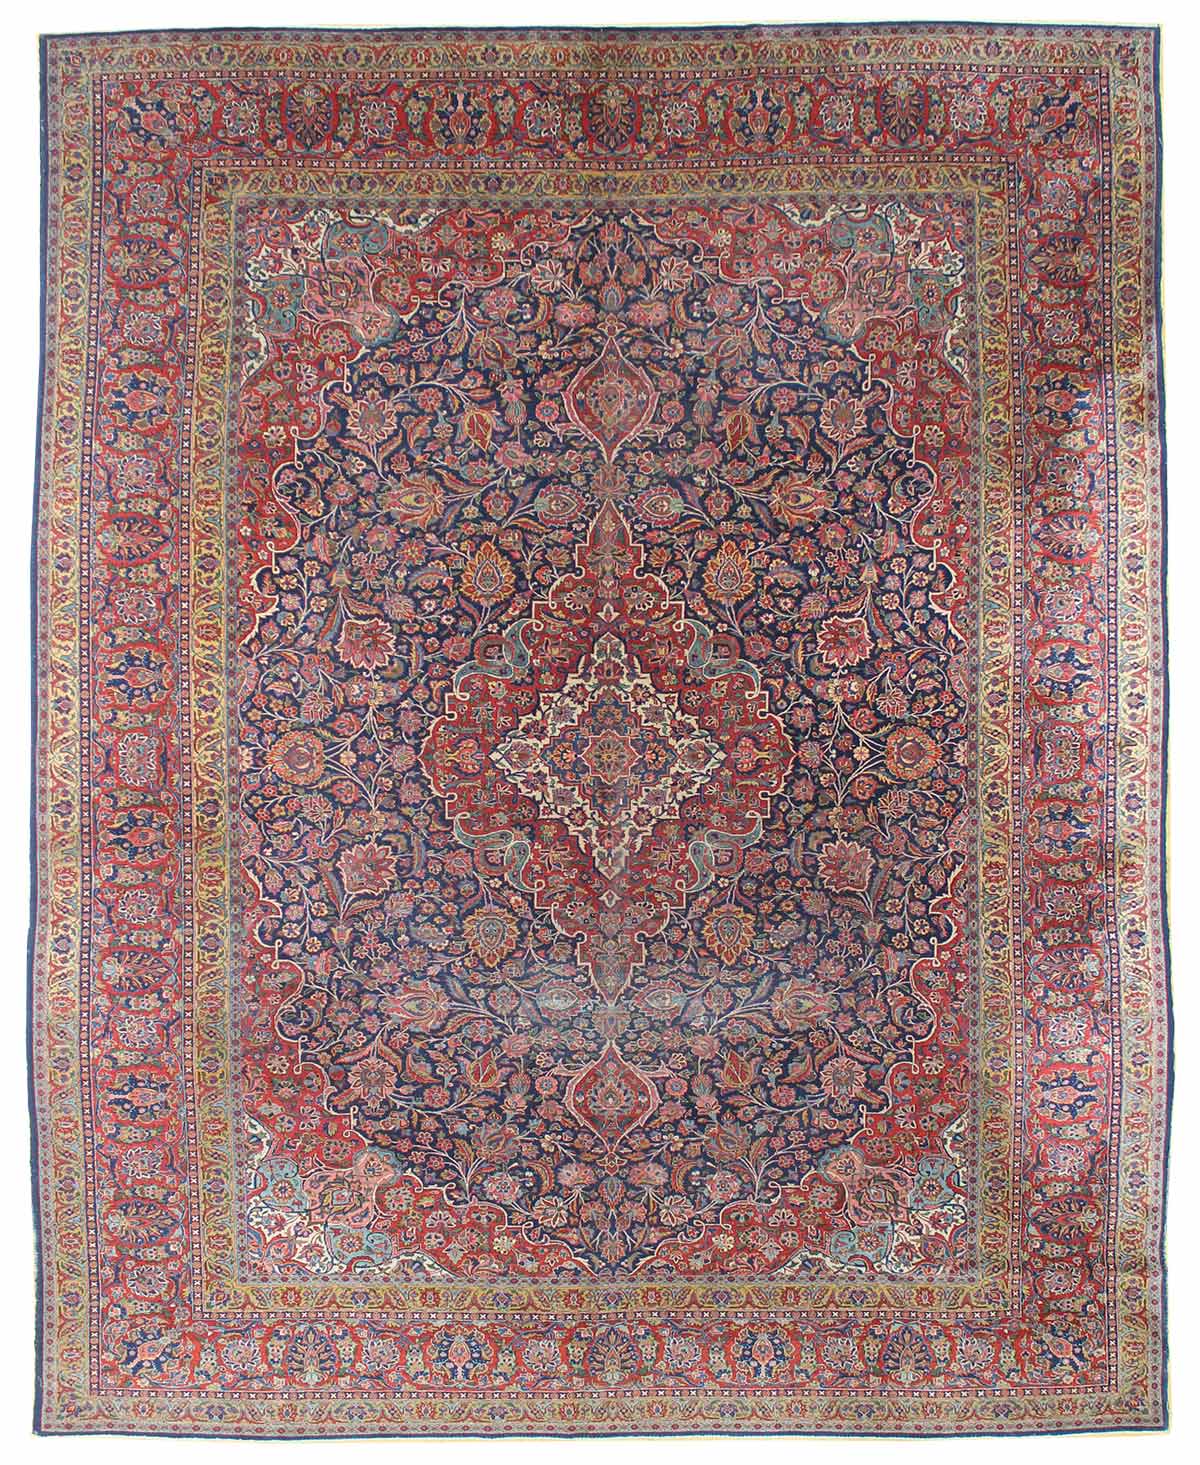 Antique Kashan Handwoven Traditional Rug